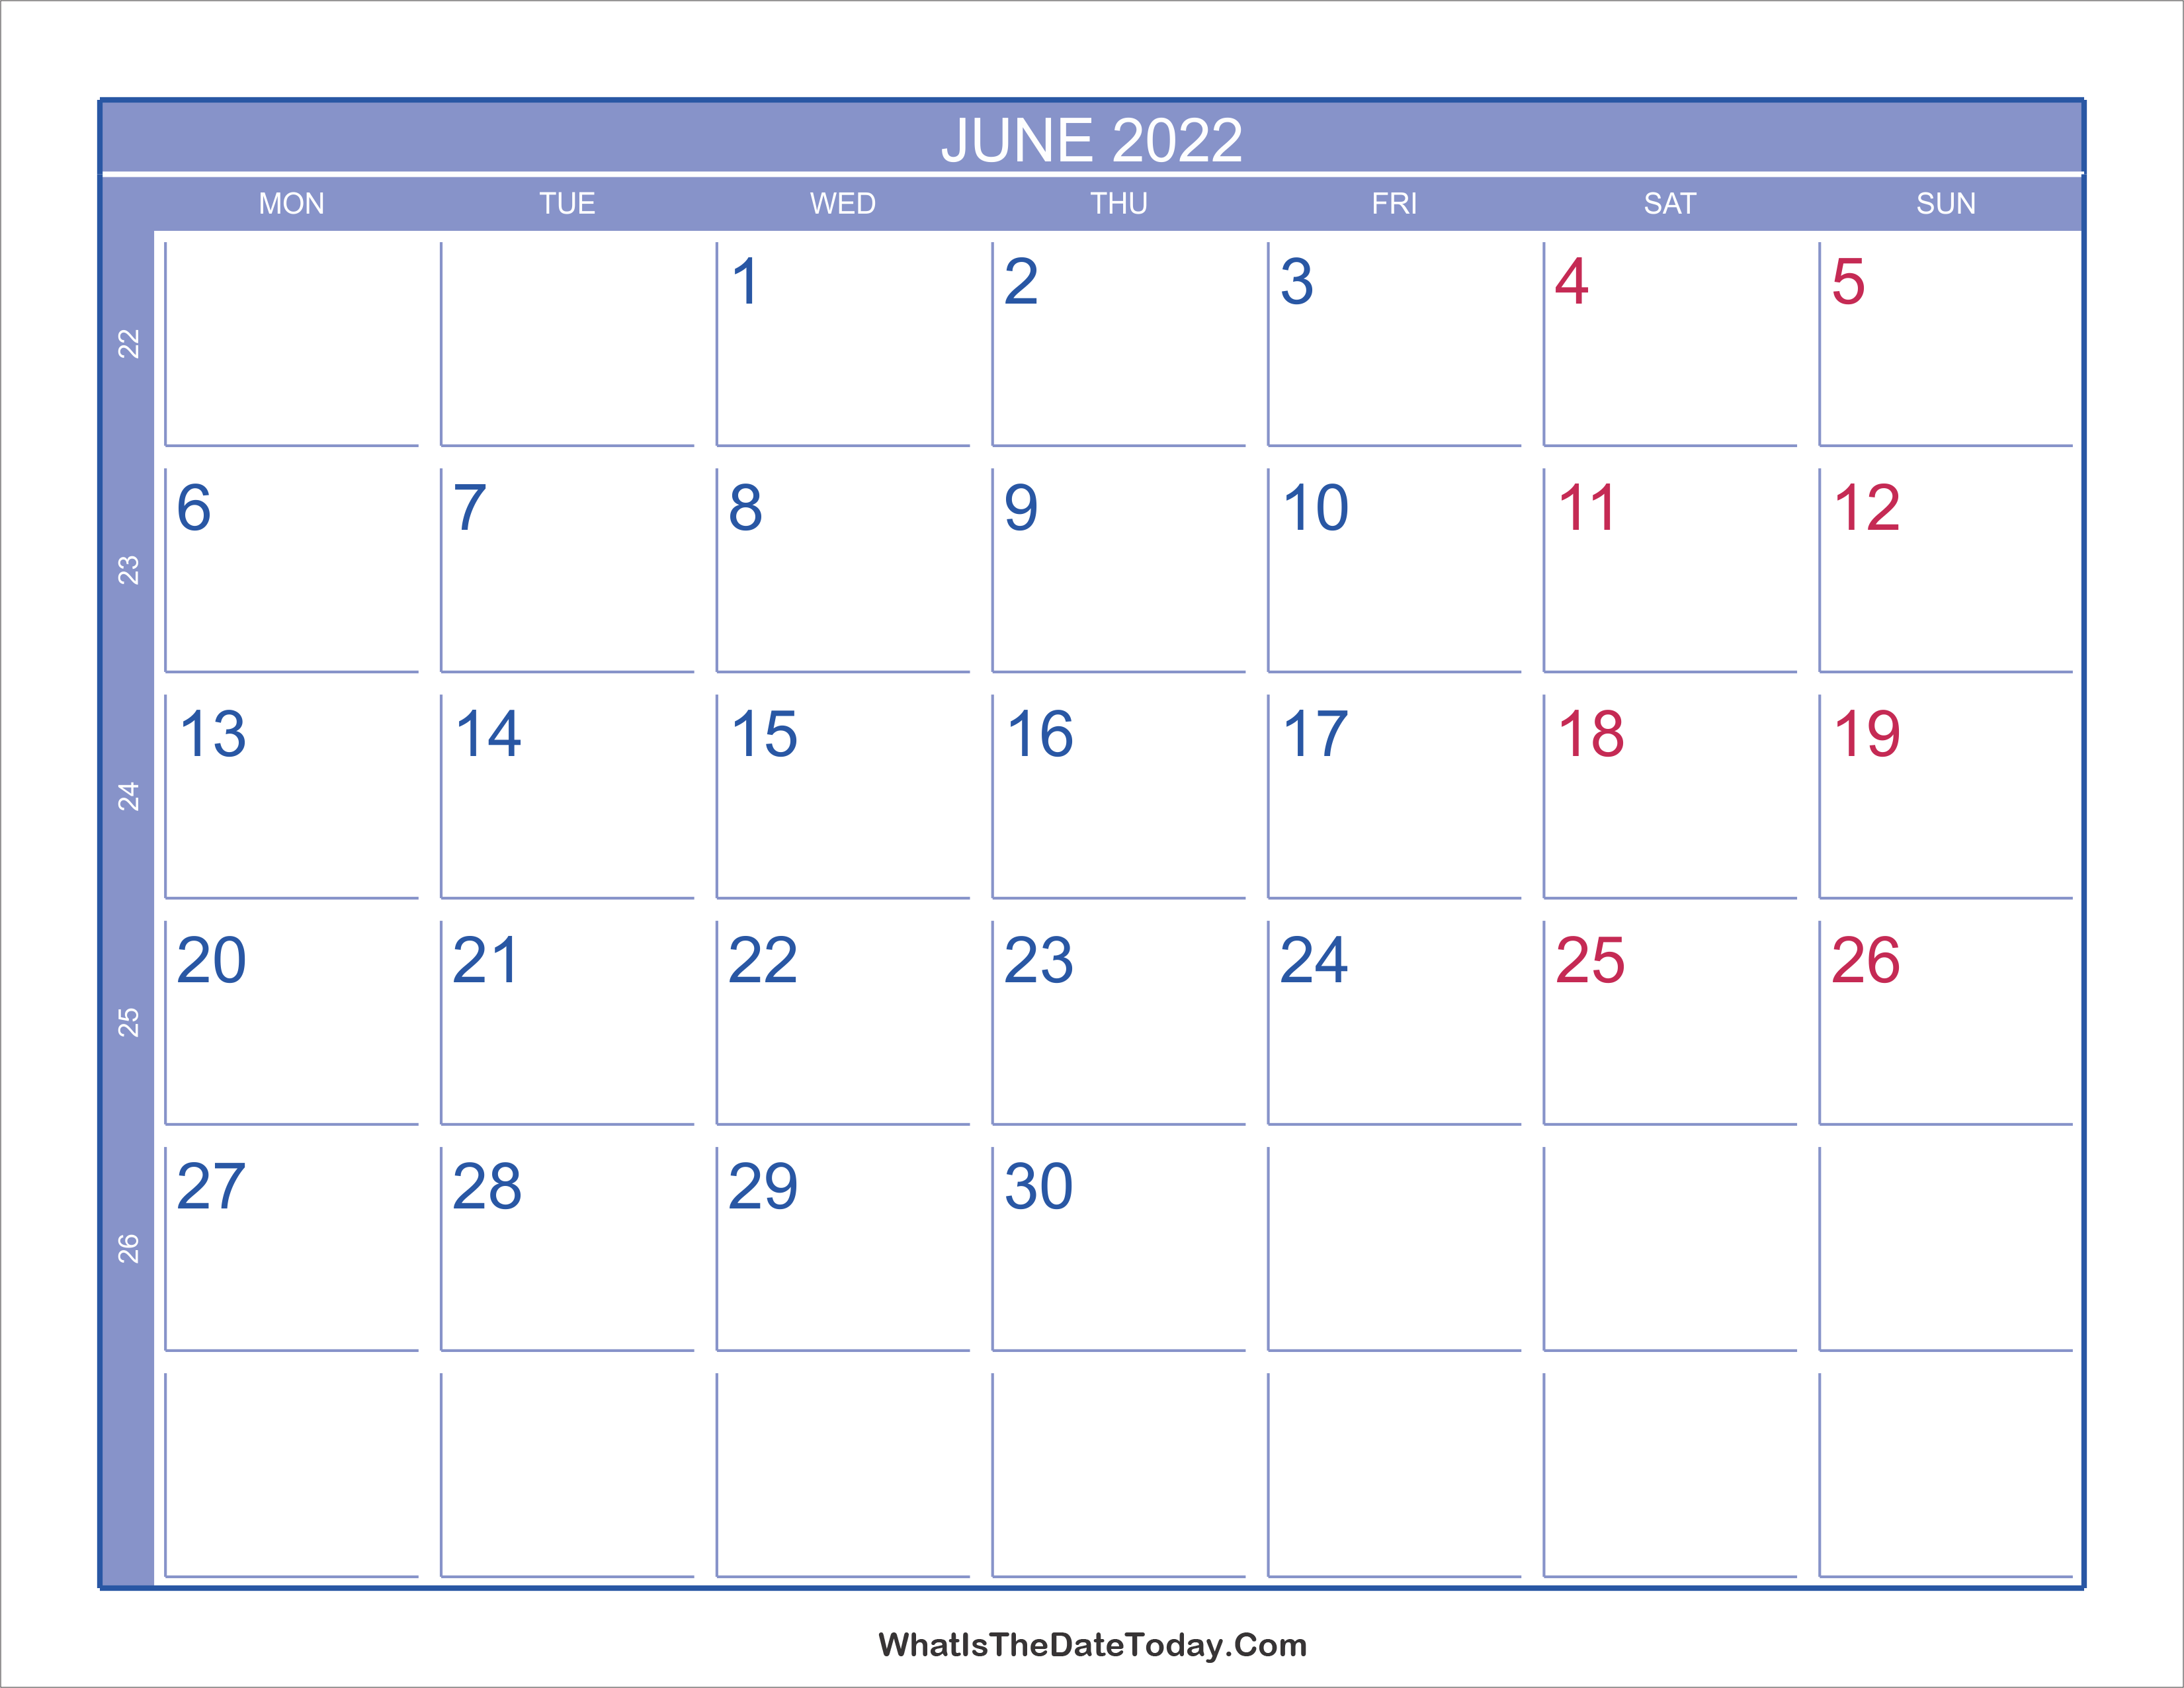 Dongcong Net Calendar 2022 2022 June Calendar With Week Numbers | Whatisthedatetoday.com